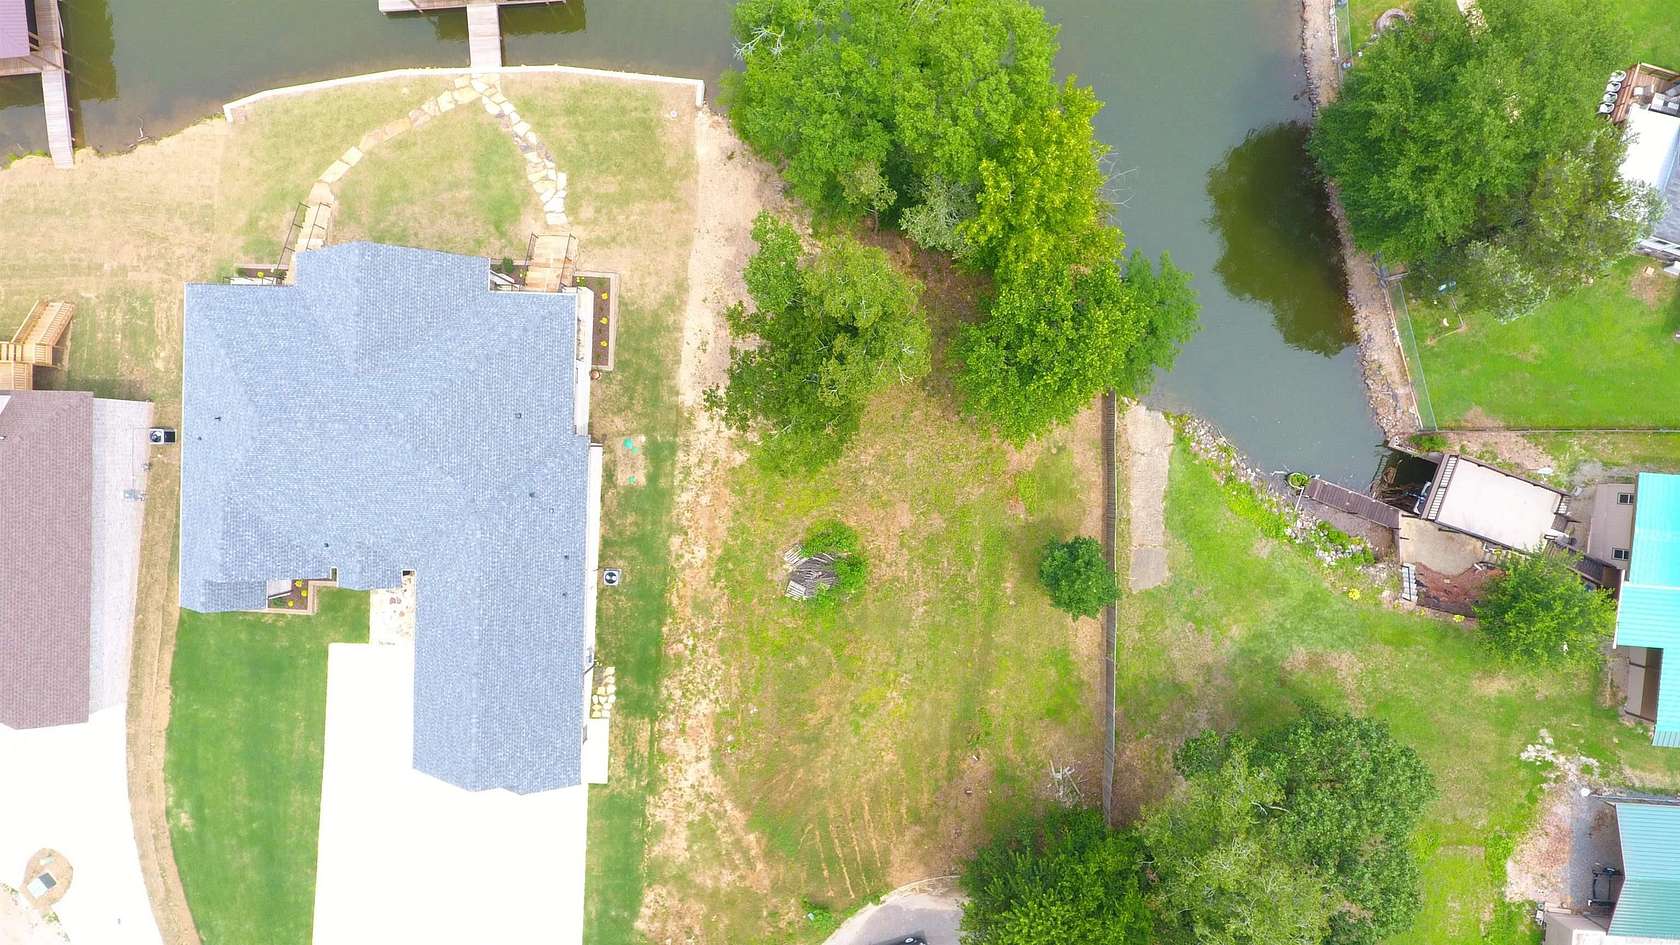 0.3 Acres of Residential Land for Sale in Hot Springs, Arkansas